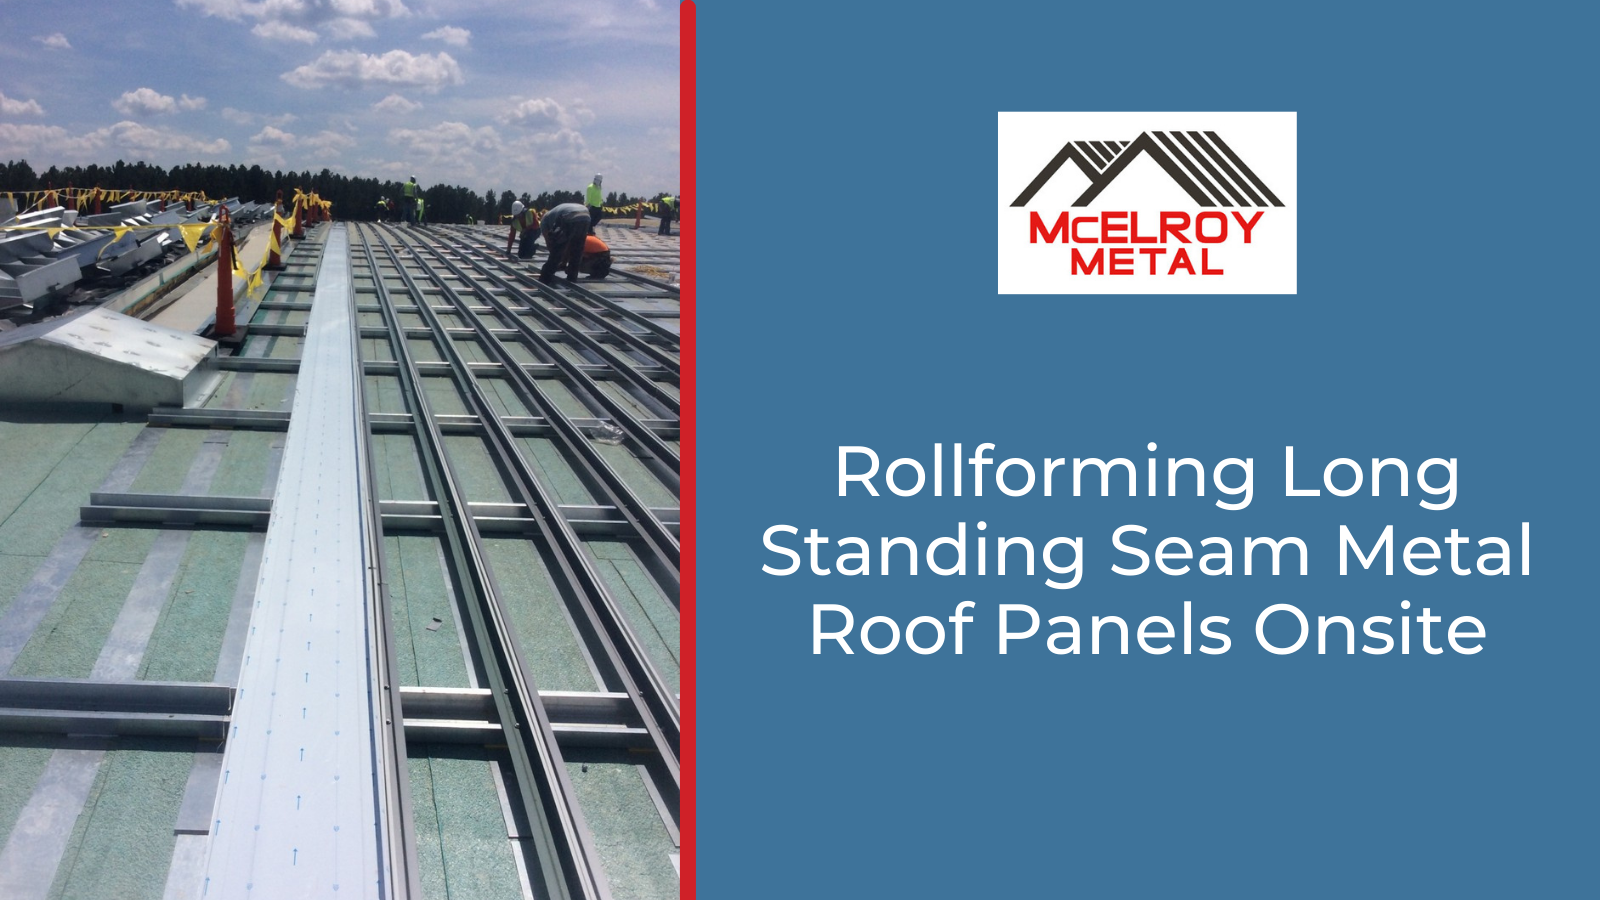 Rollforming Long Standing Seam Metal Roof Panels Onsite